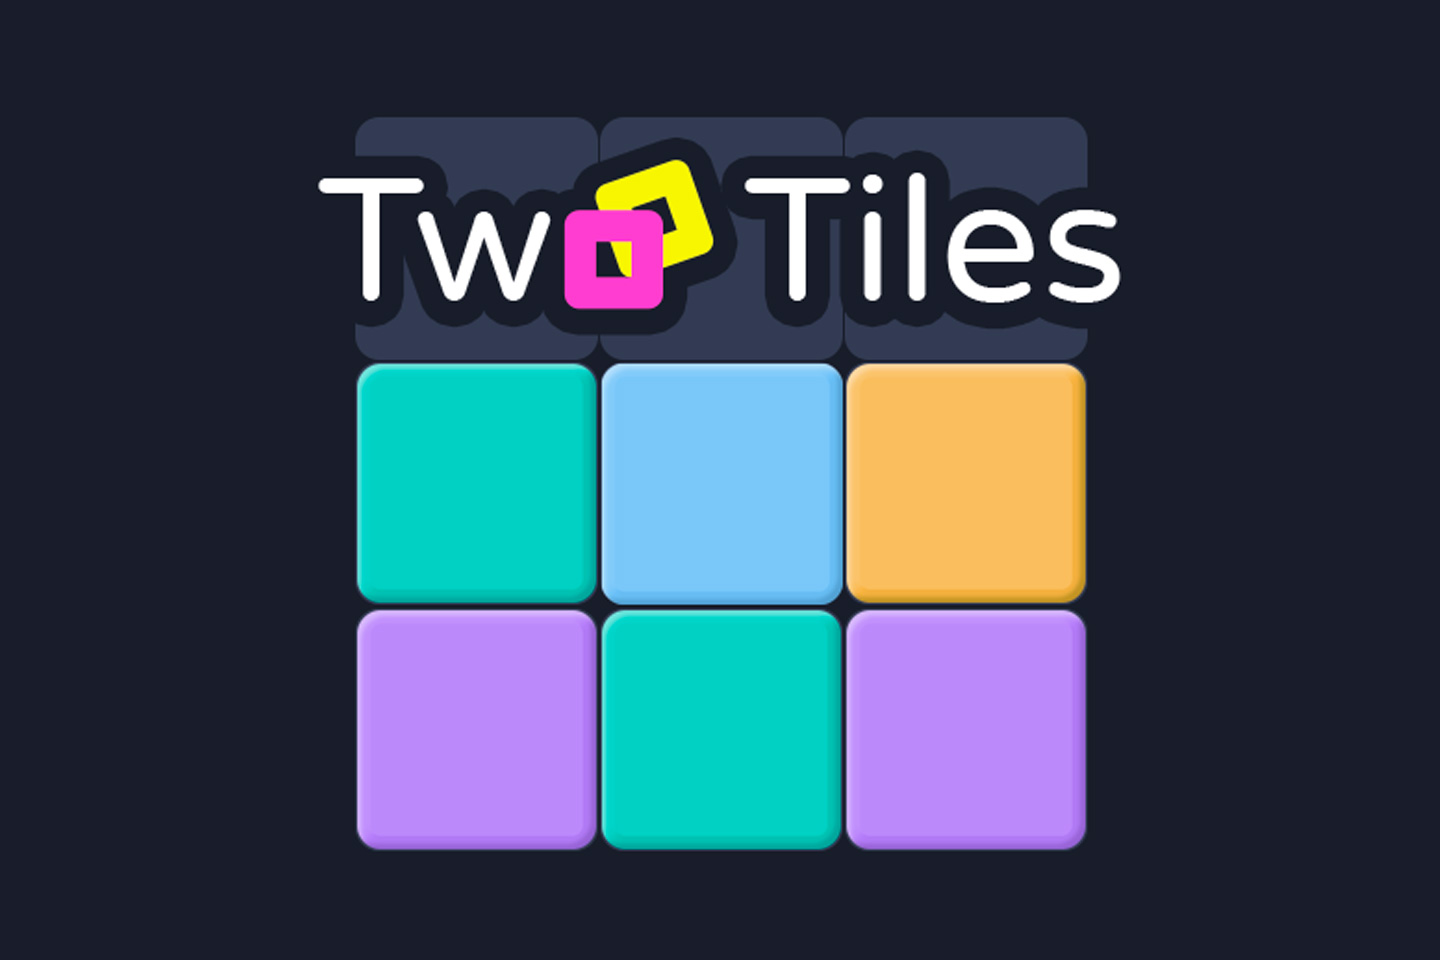 Two Tiles